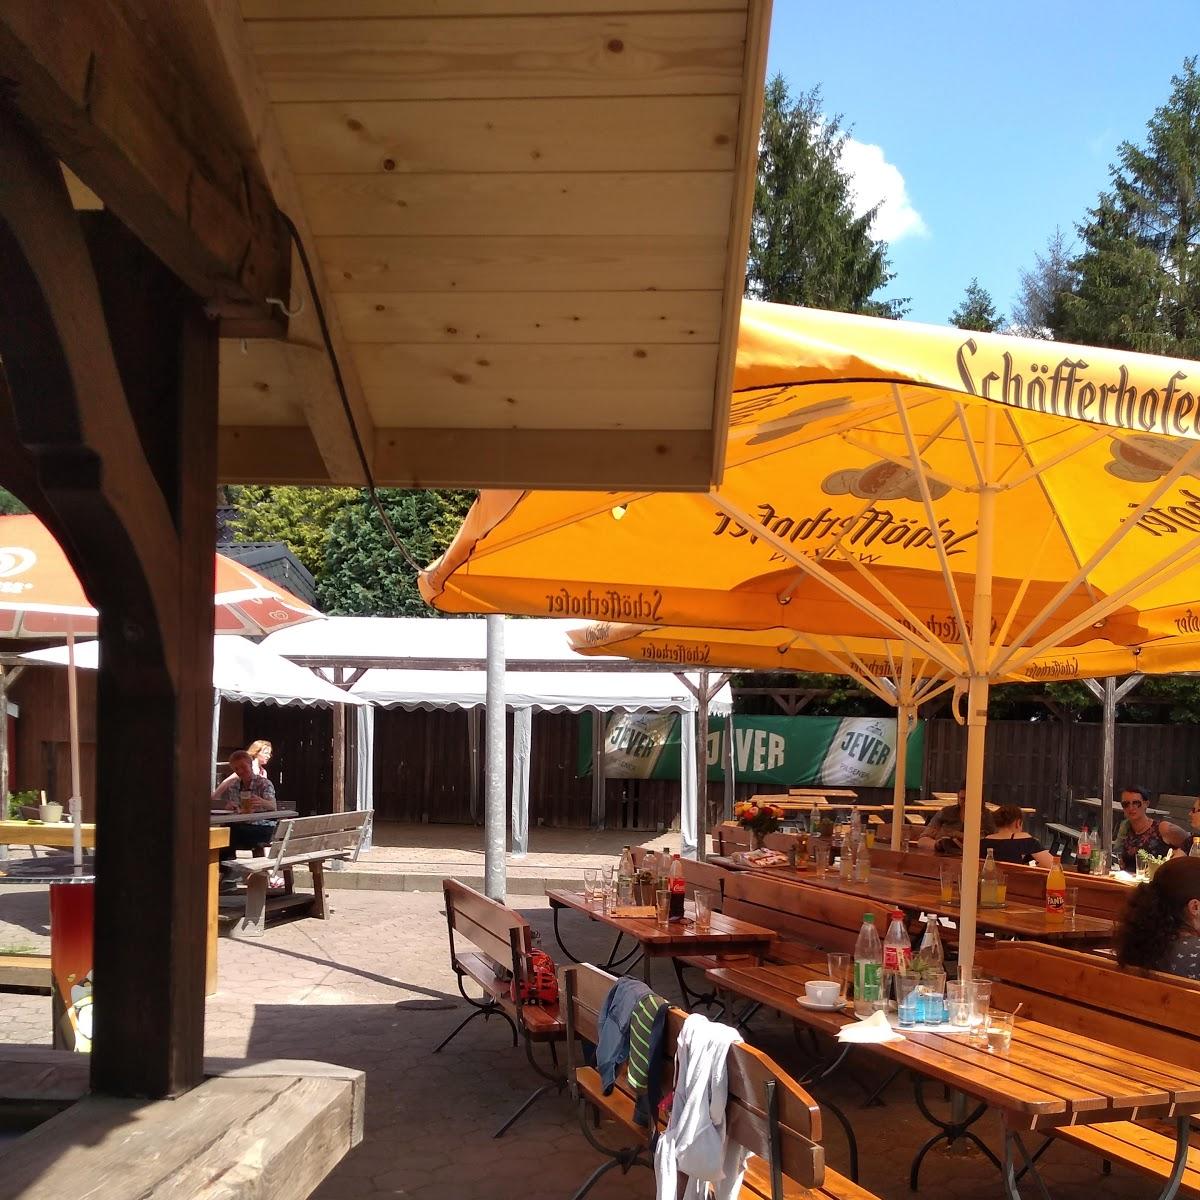 Restaurant "Am Wald - Biergarten, Café & Minigolf" in Schwanewede